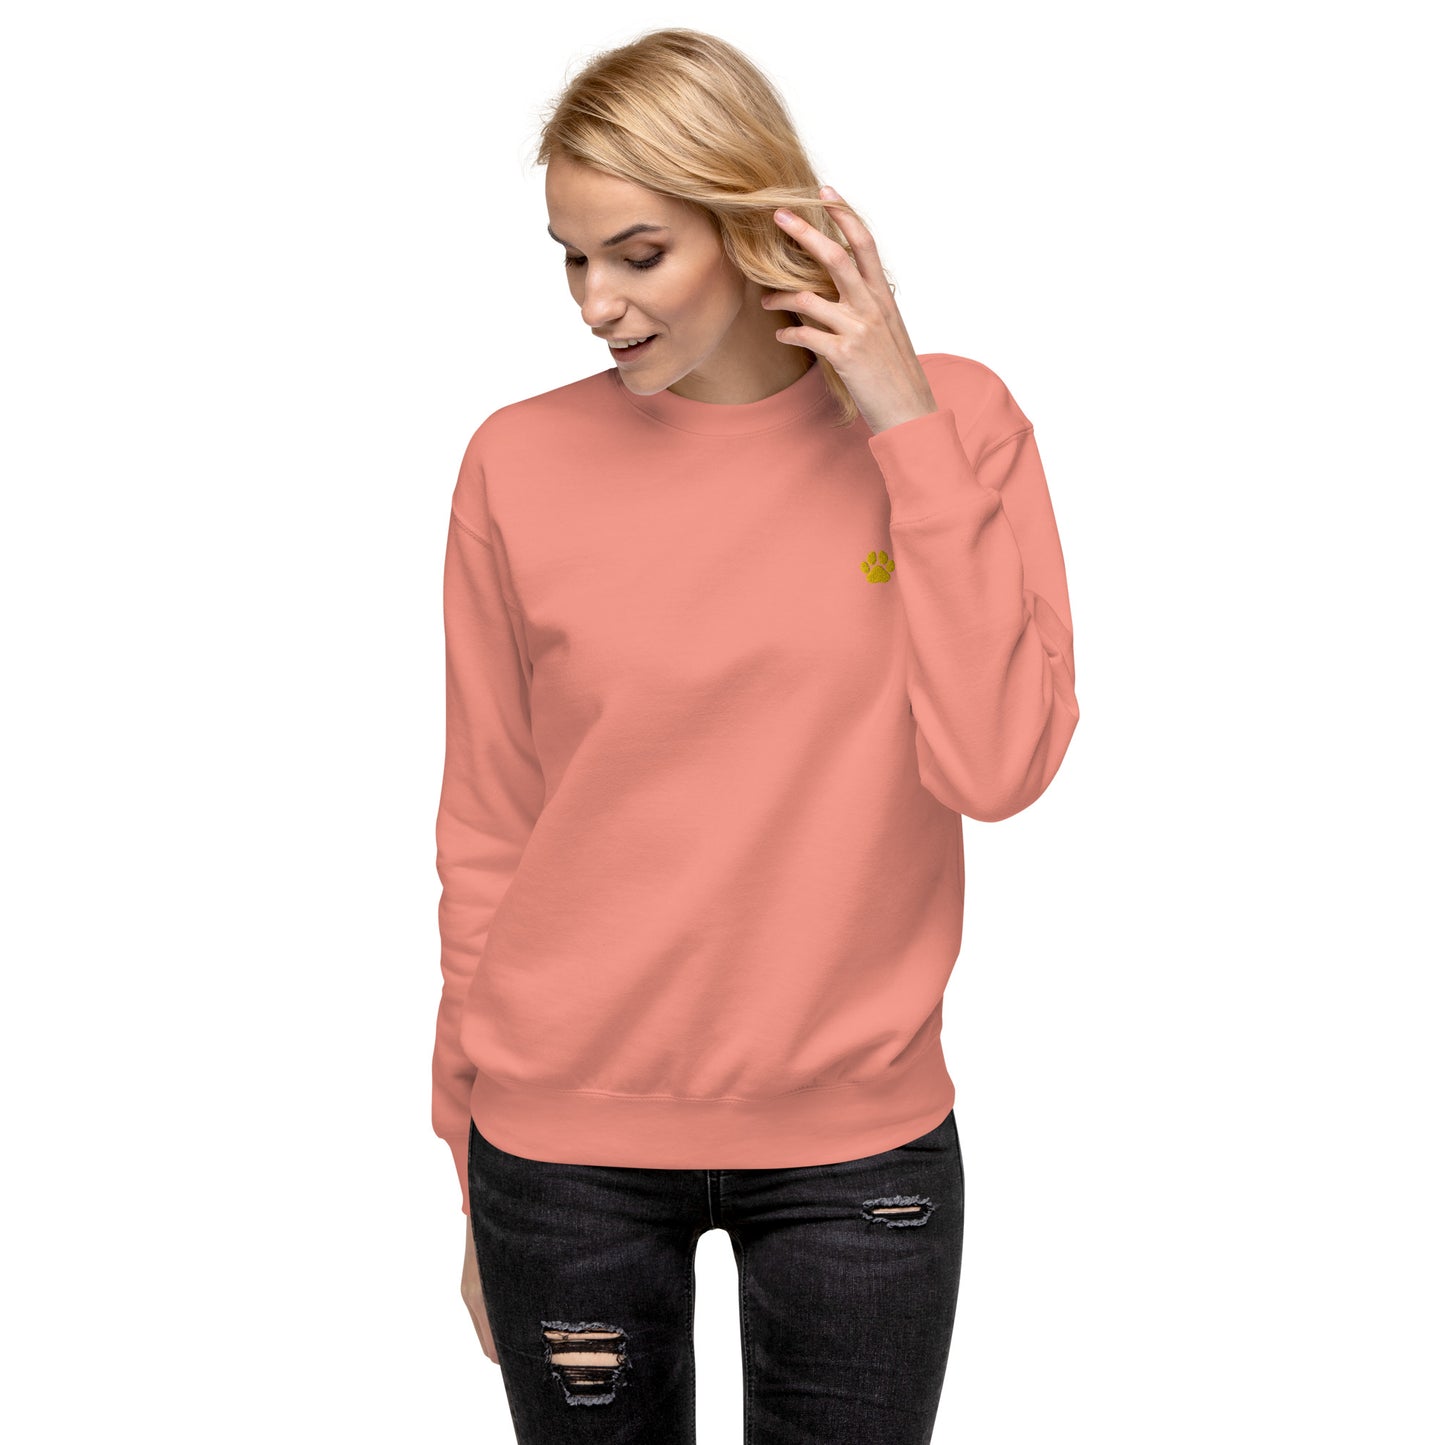 Dawg In DeluluLand - Unisex Premium Sweatshirt